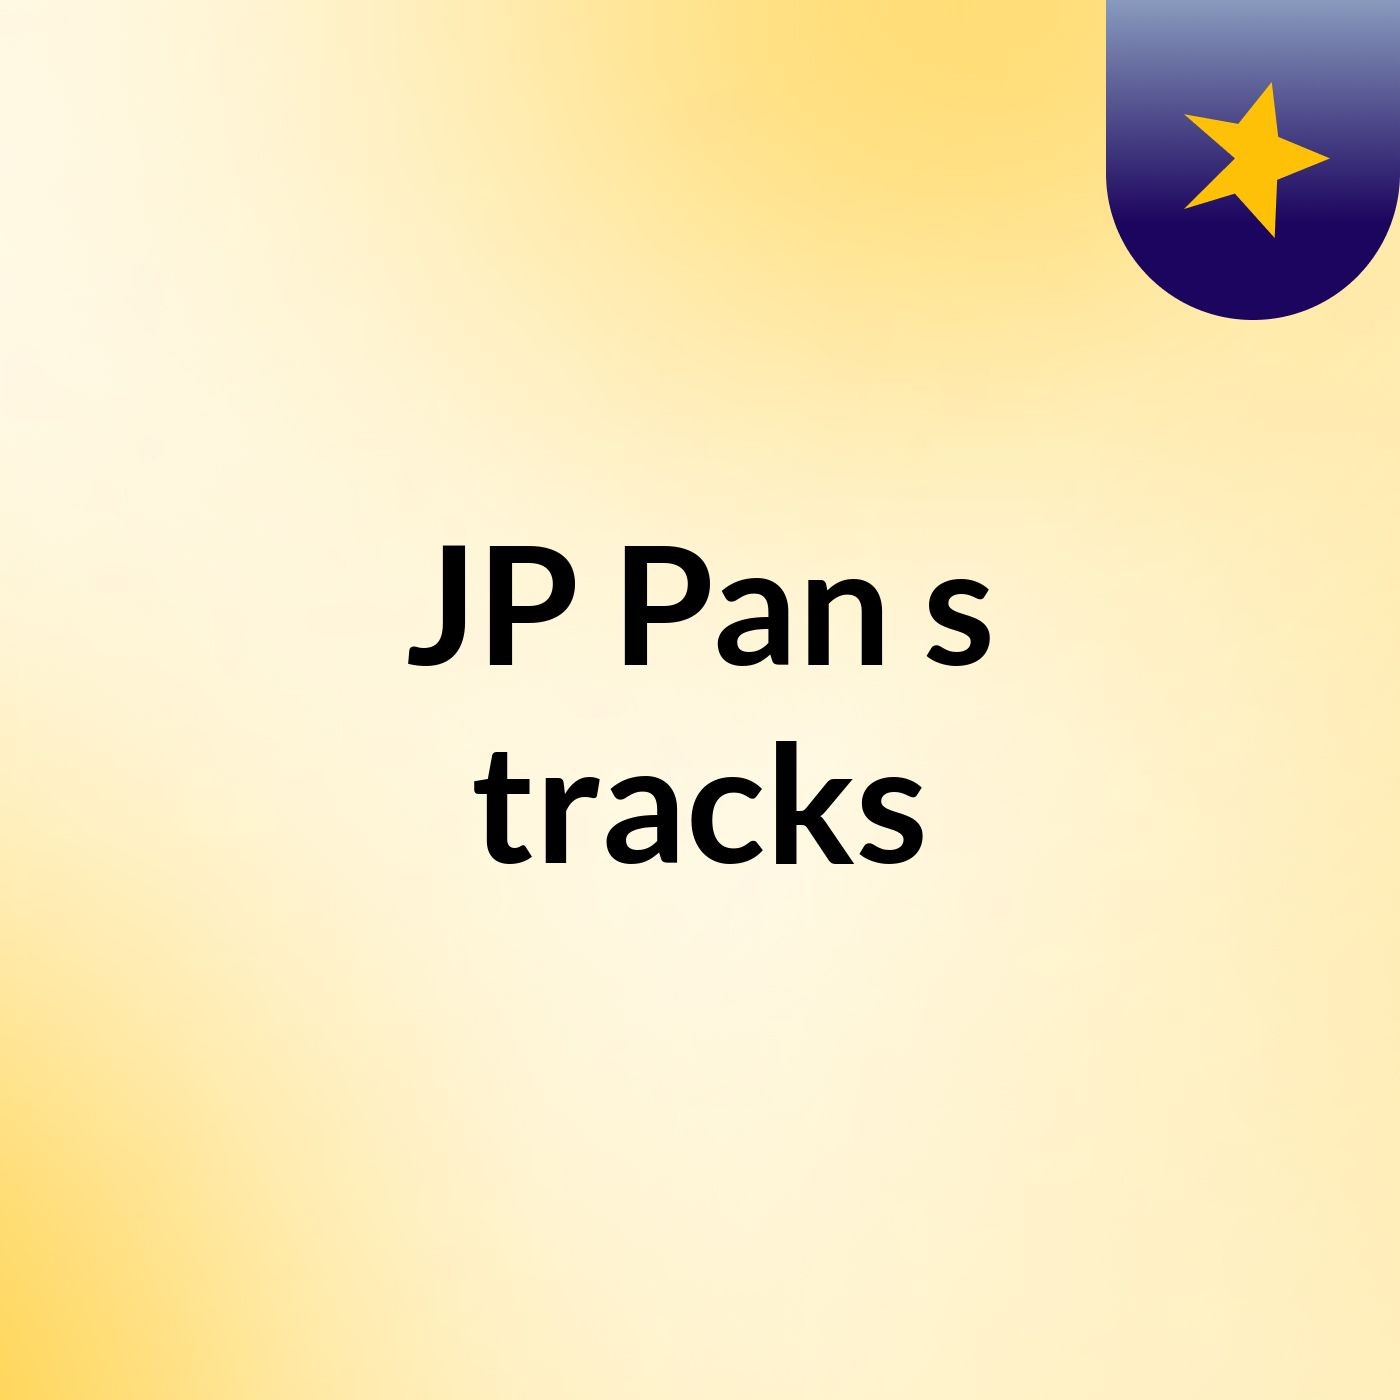 JP Pan's tracks